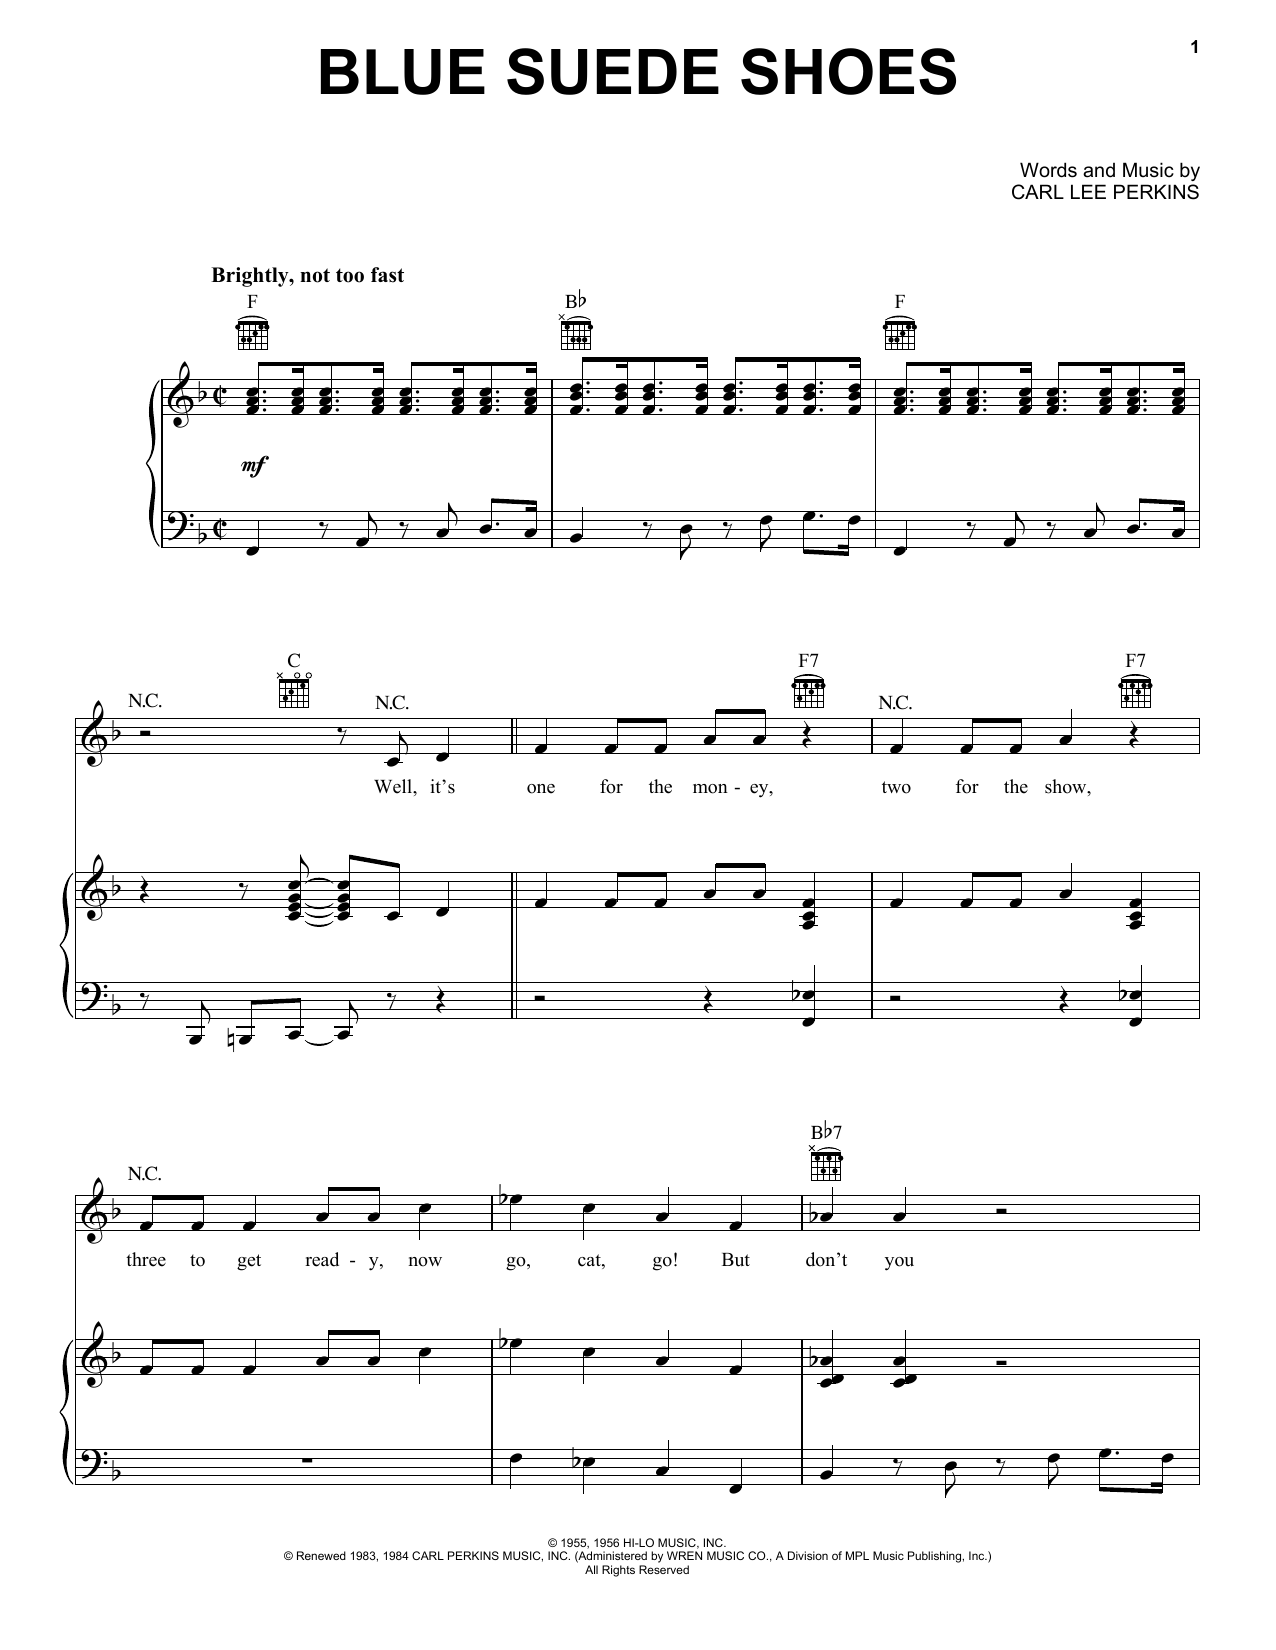 Elvis Presley Blue Suede Shoes Sheet Music Notes & Chords for Ukulele with strumming patterns - Download or Print PDF